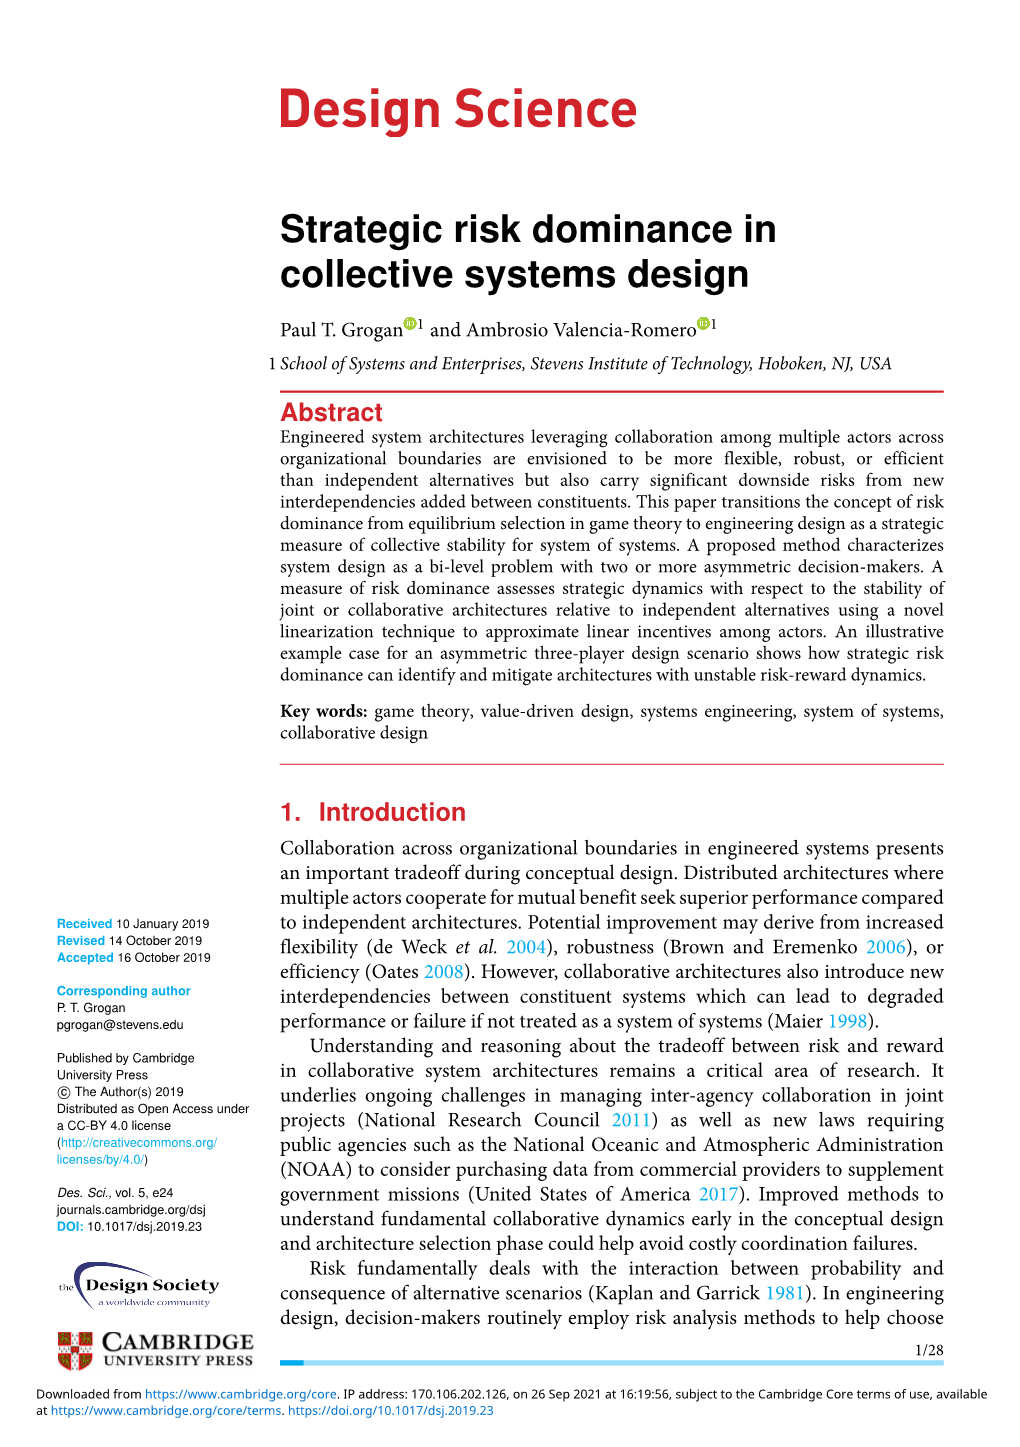 Strategic Risk Dominance in Collective Systems Design